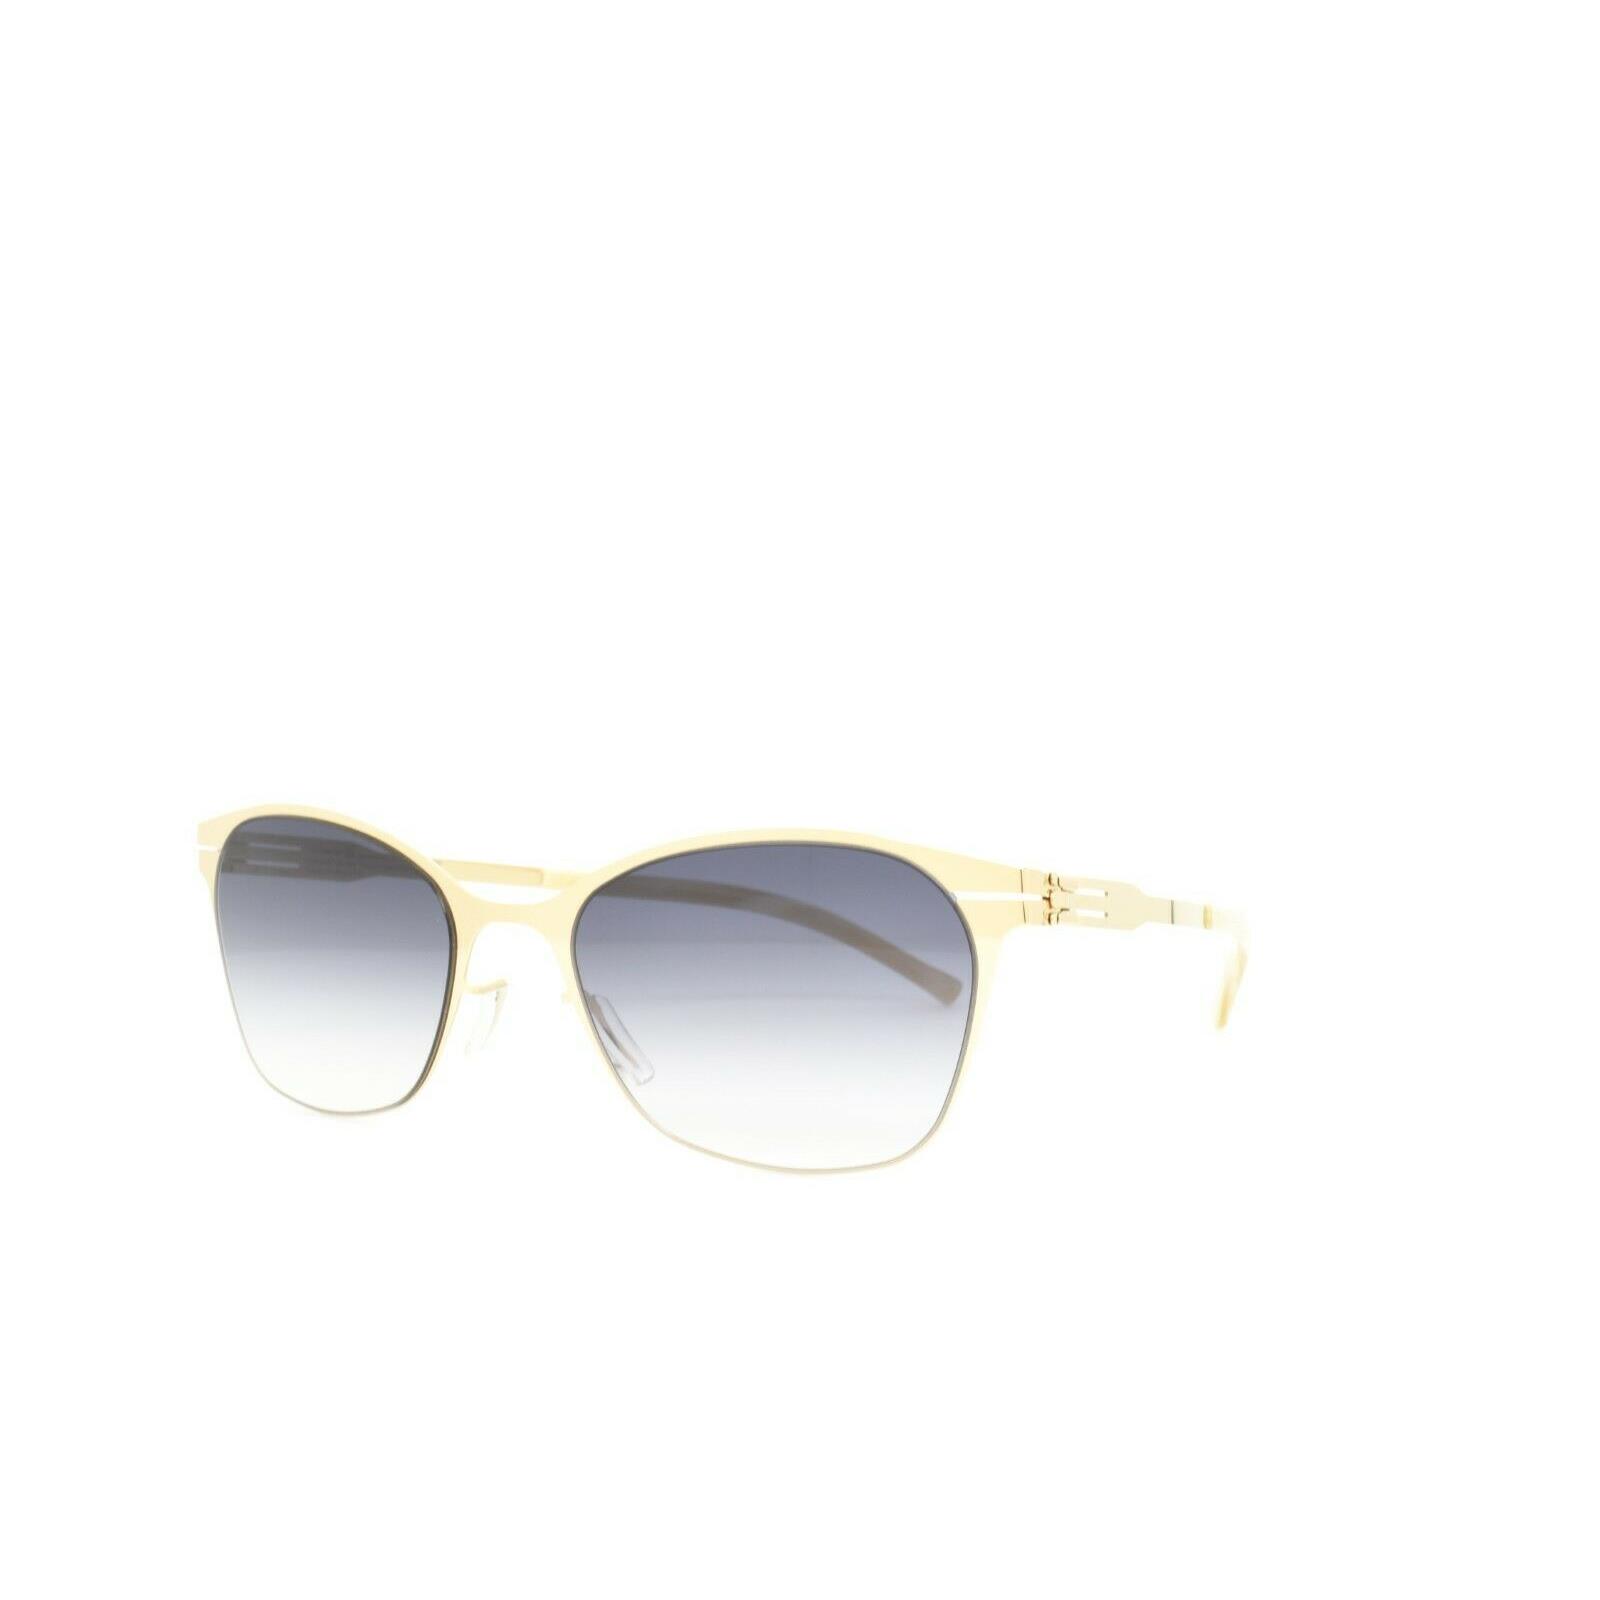 iC Berlin Sunglasses Tina H. Rose-gold 53-21-145